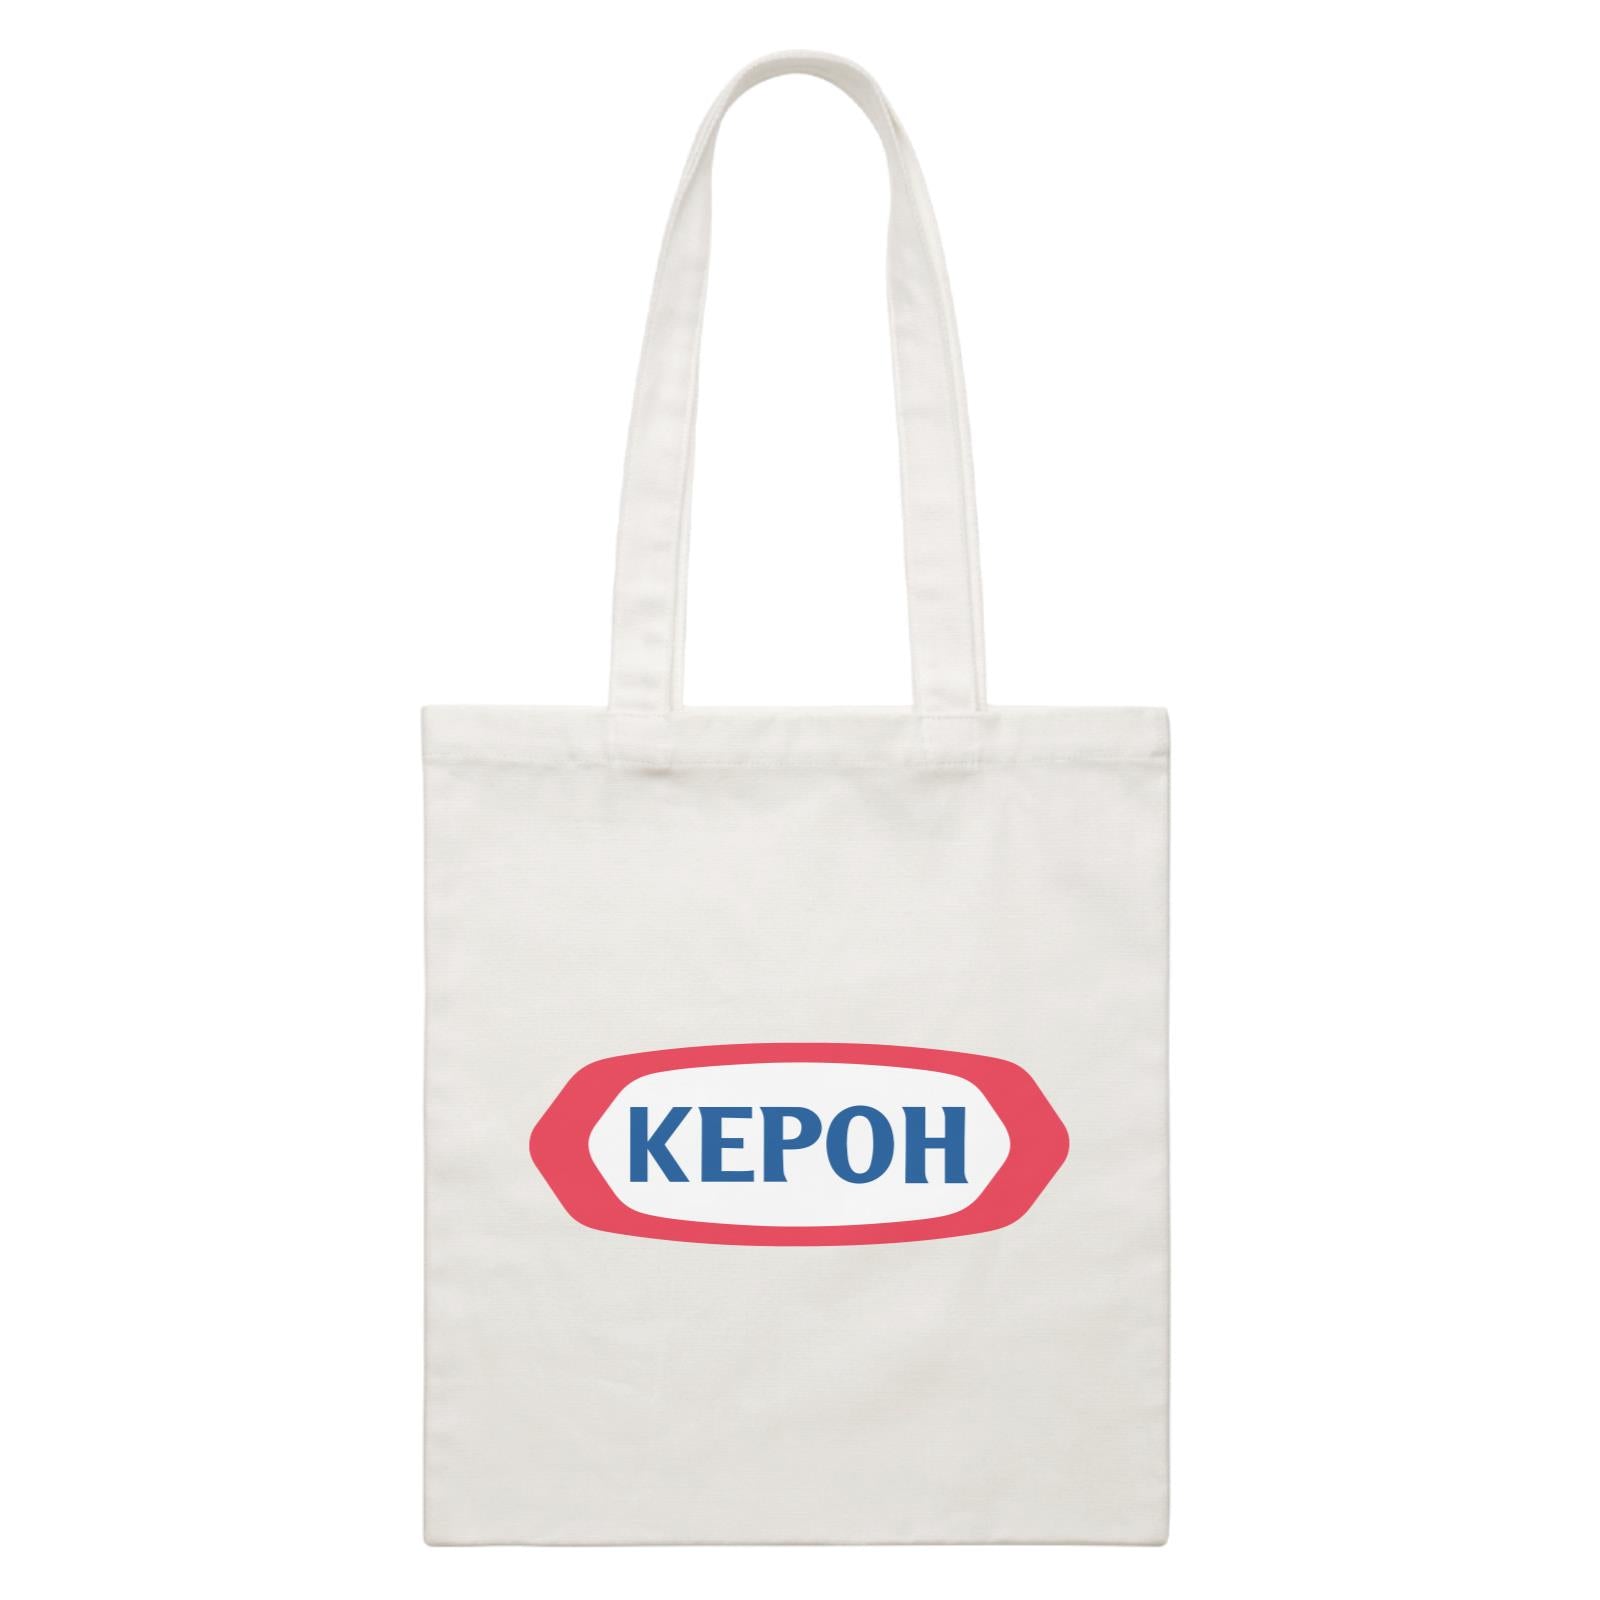 Slang Statement Kepoh Accessories White Canvas Bag